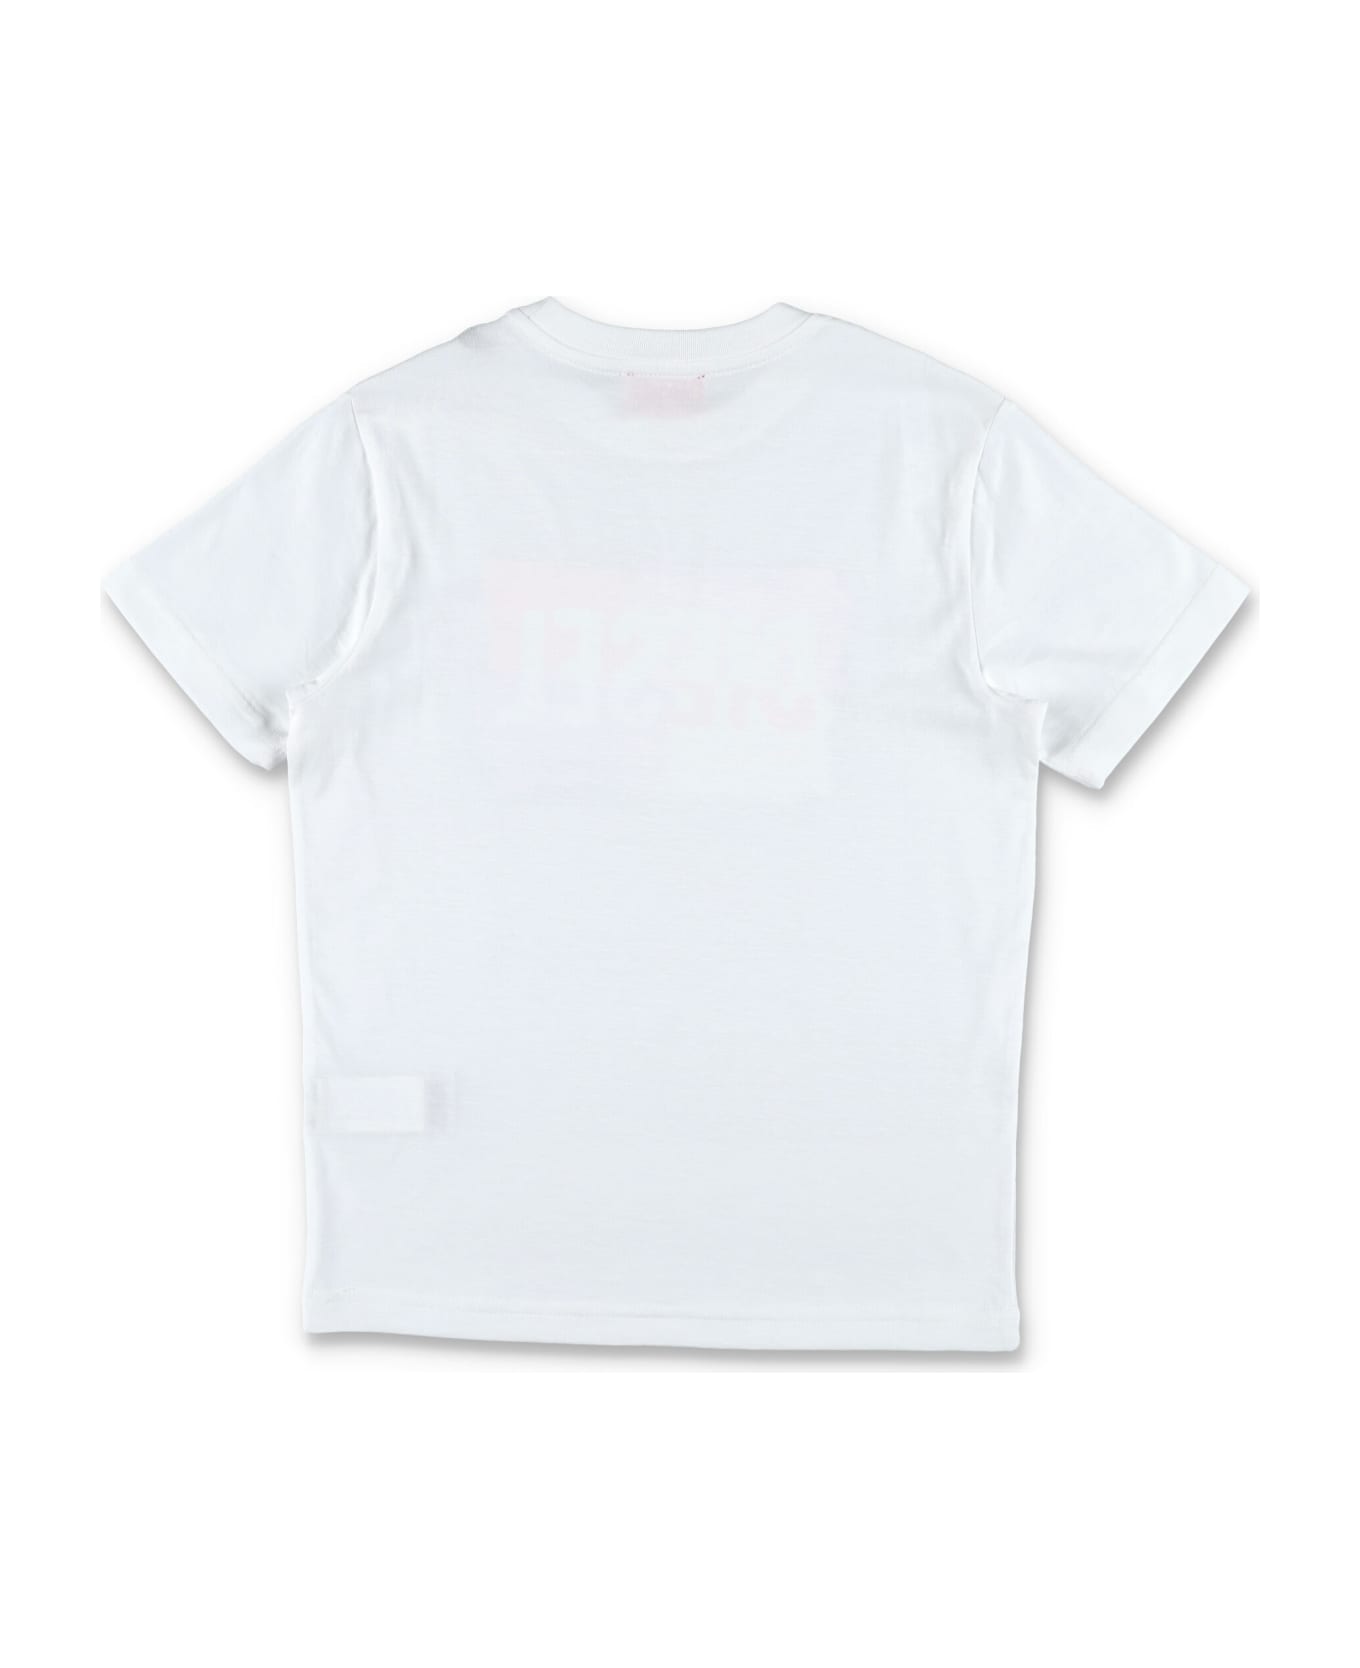 Diesel Graphic Logo T-shirt - WHITE